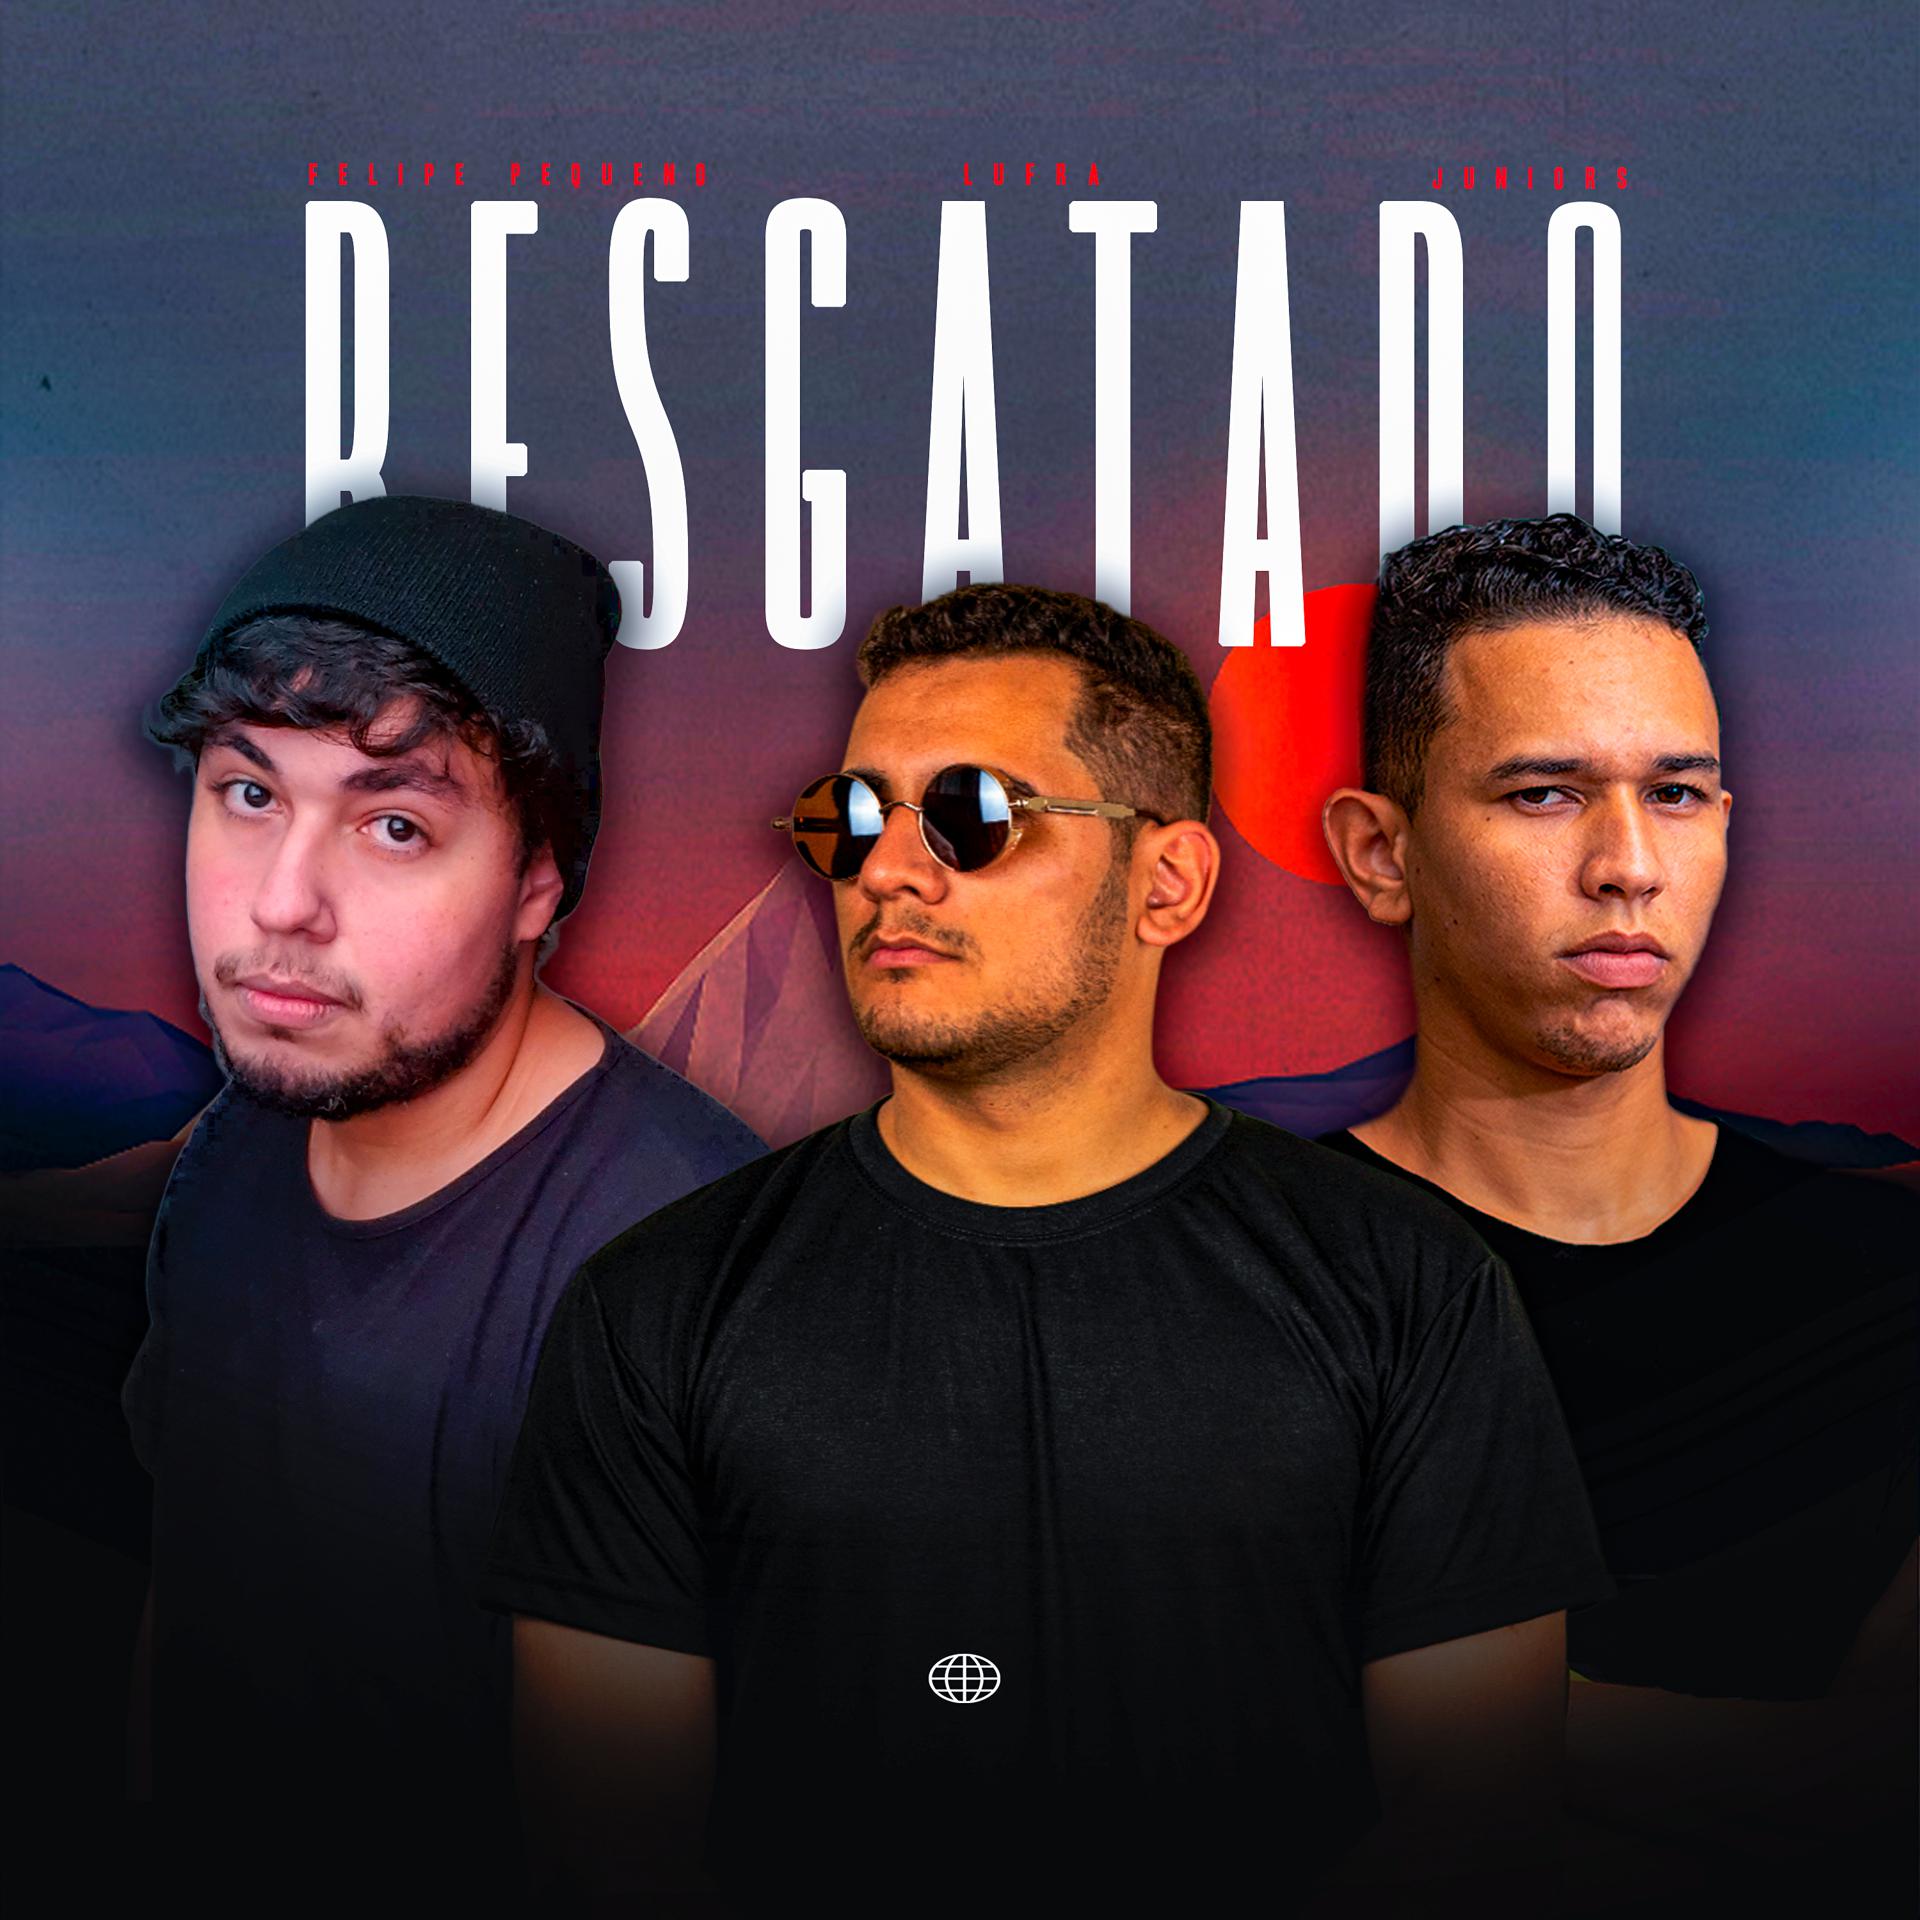 Постер альбома Resgatado